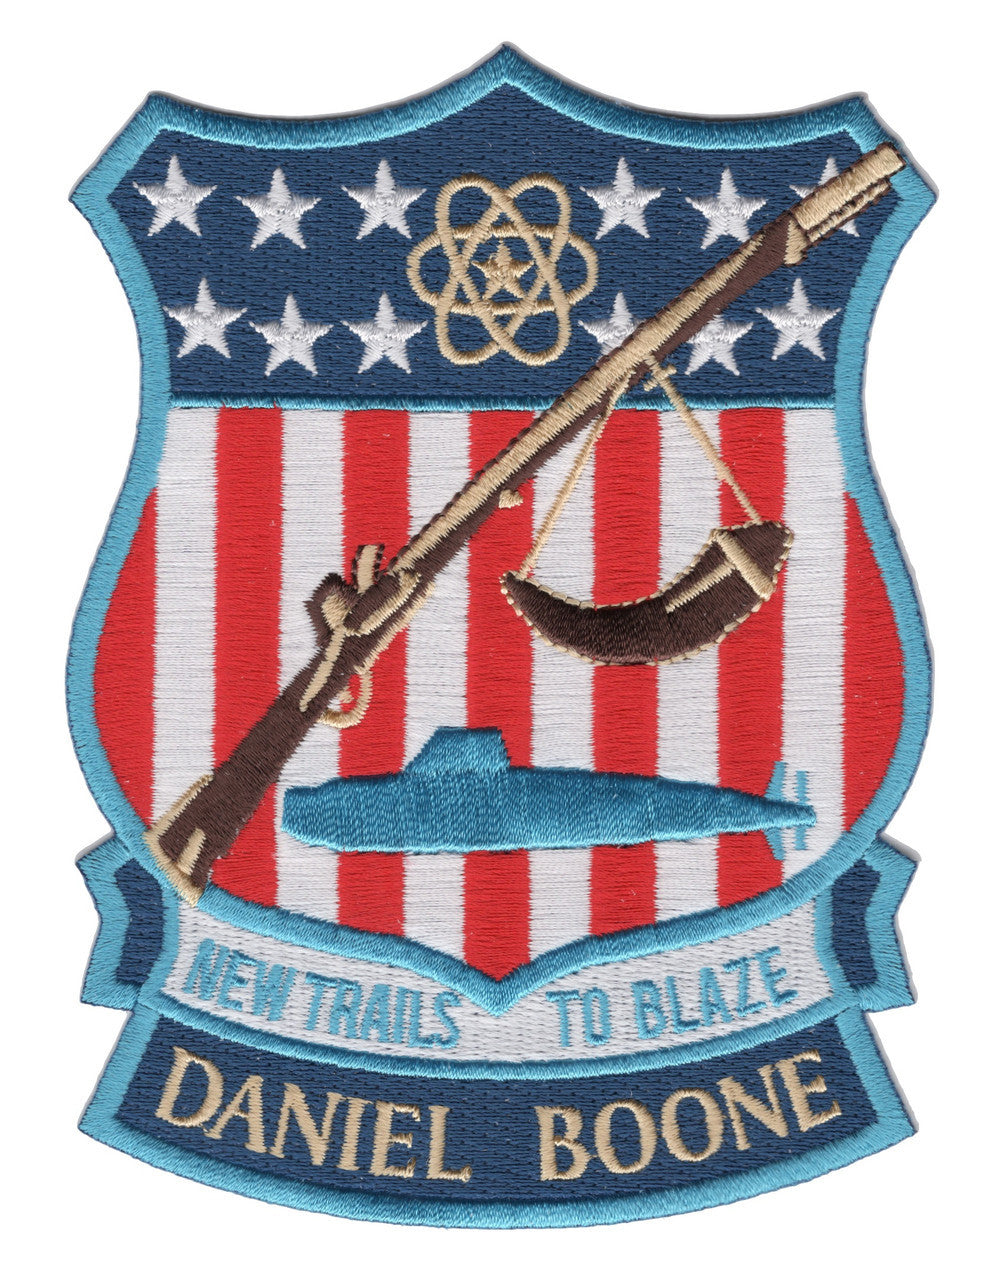 USS DANIEL BOONE SSBN 629 PATCH